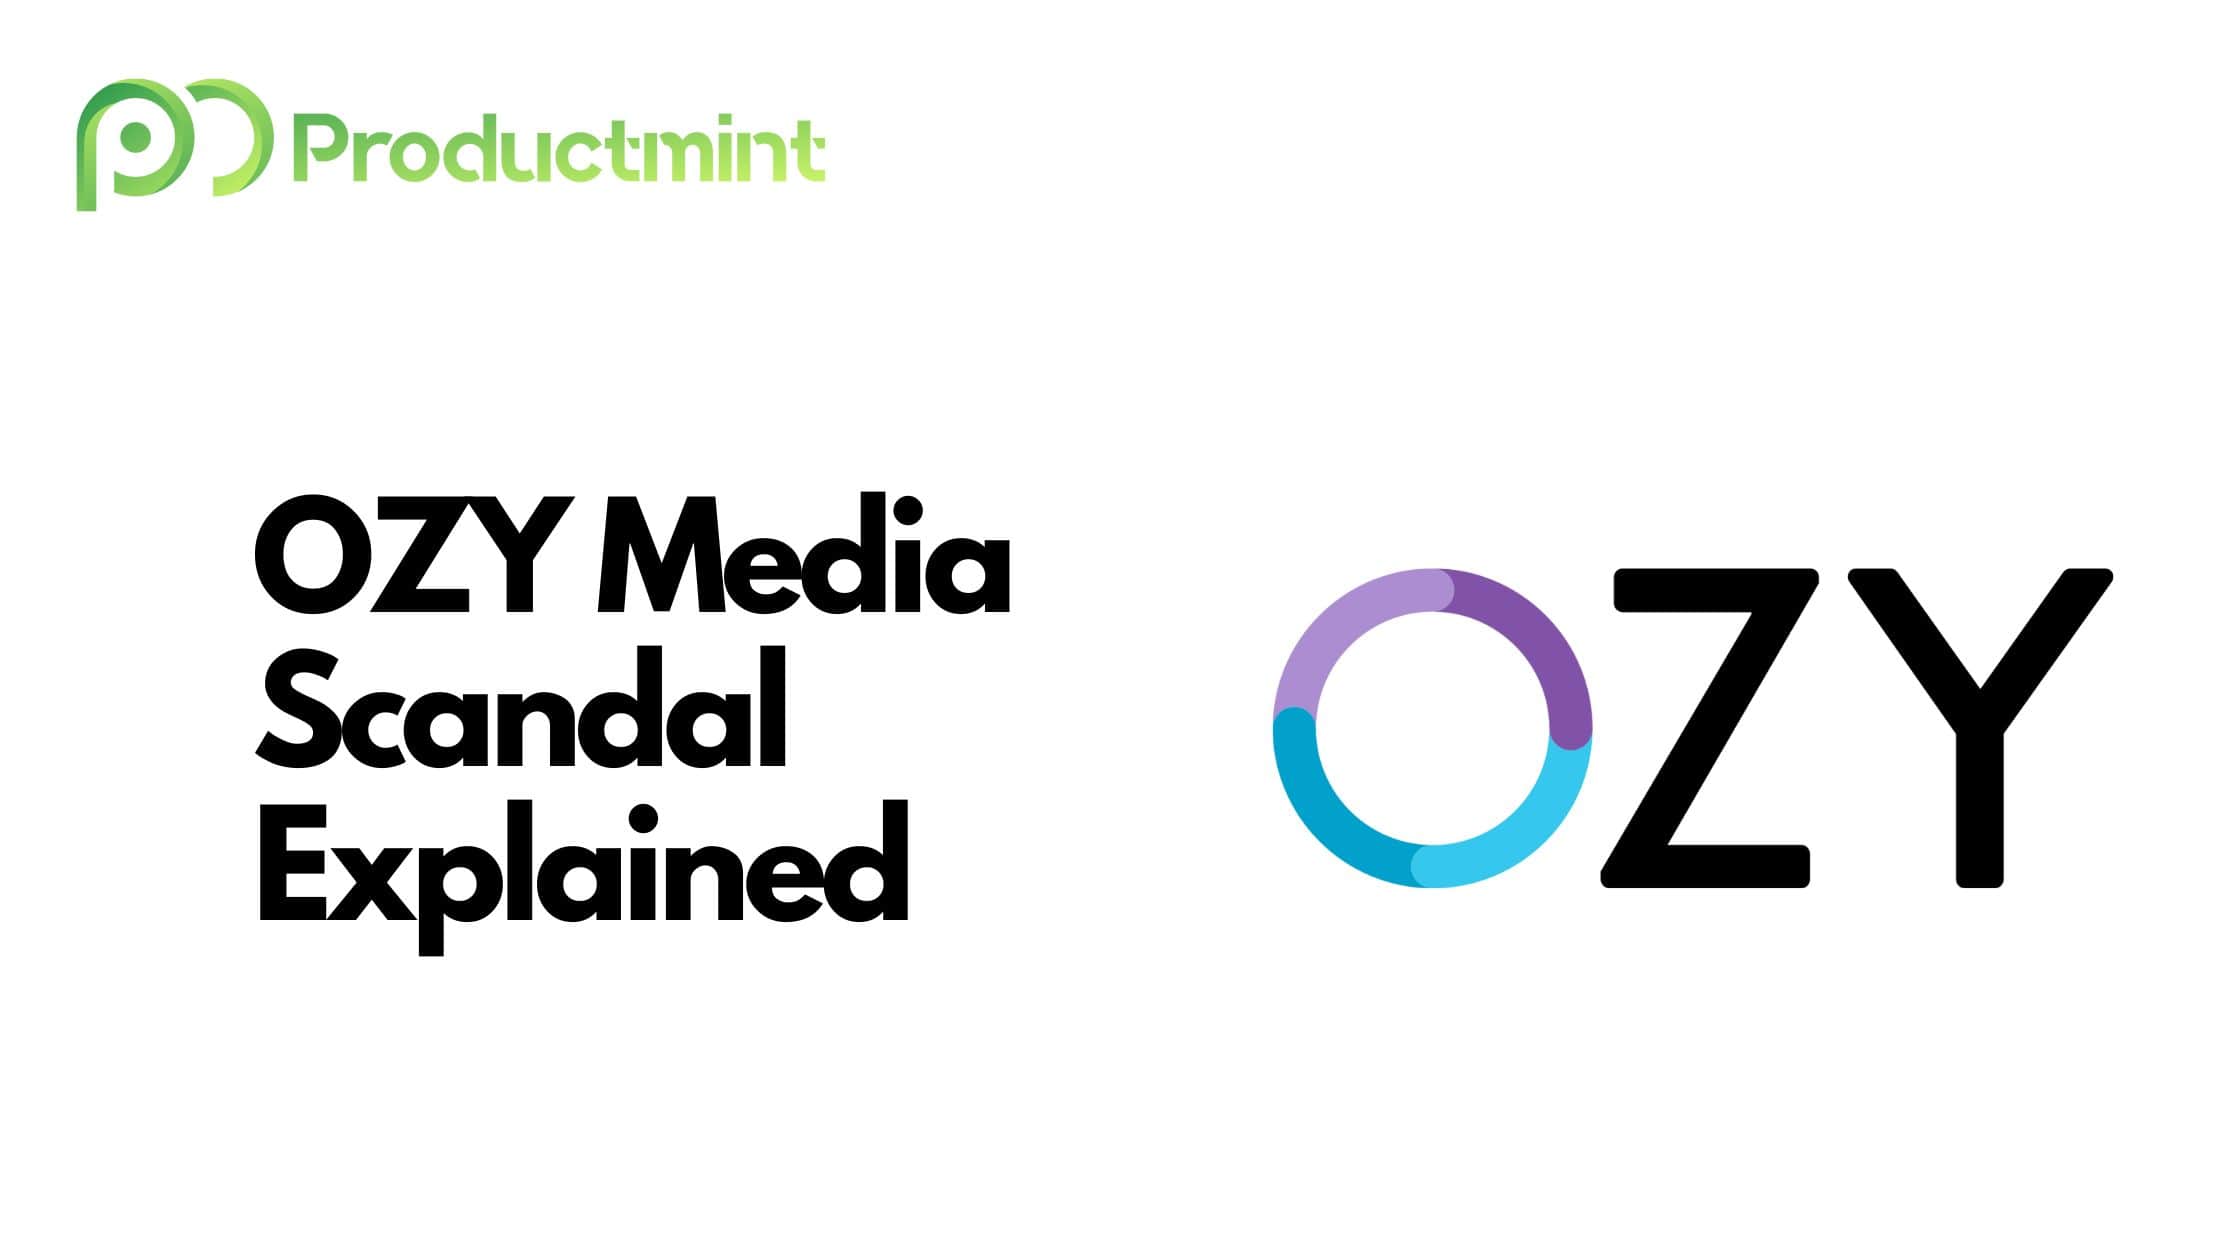 OZY Media Scandal